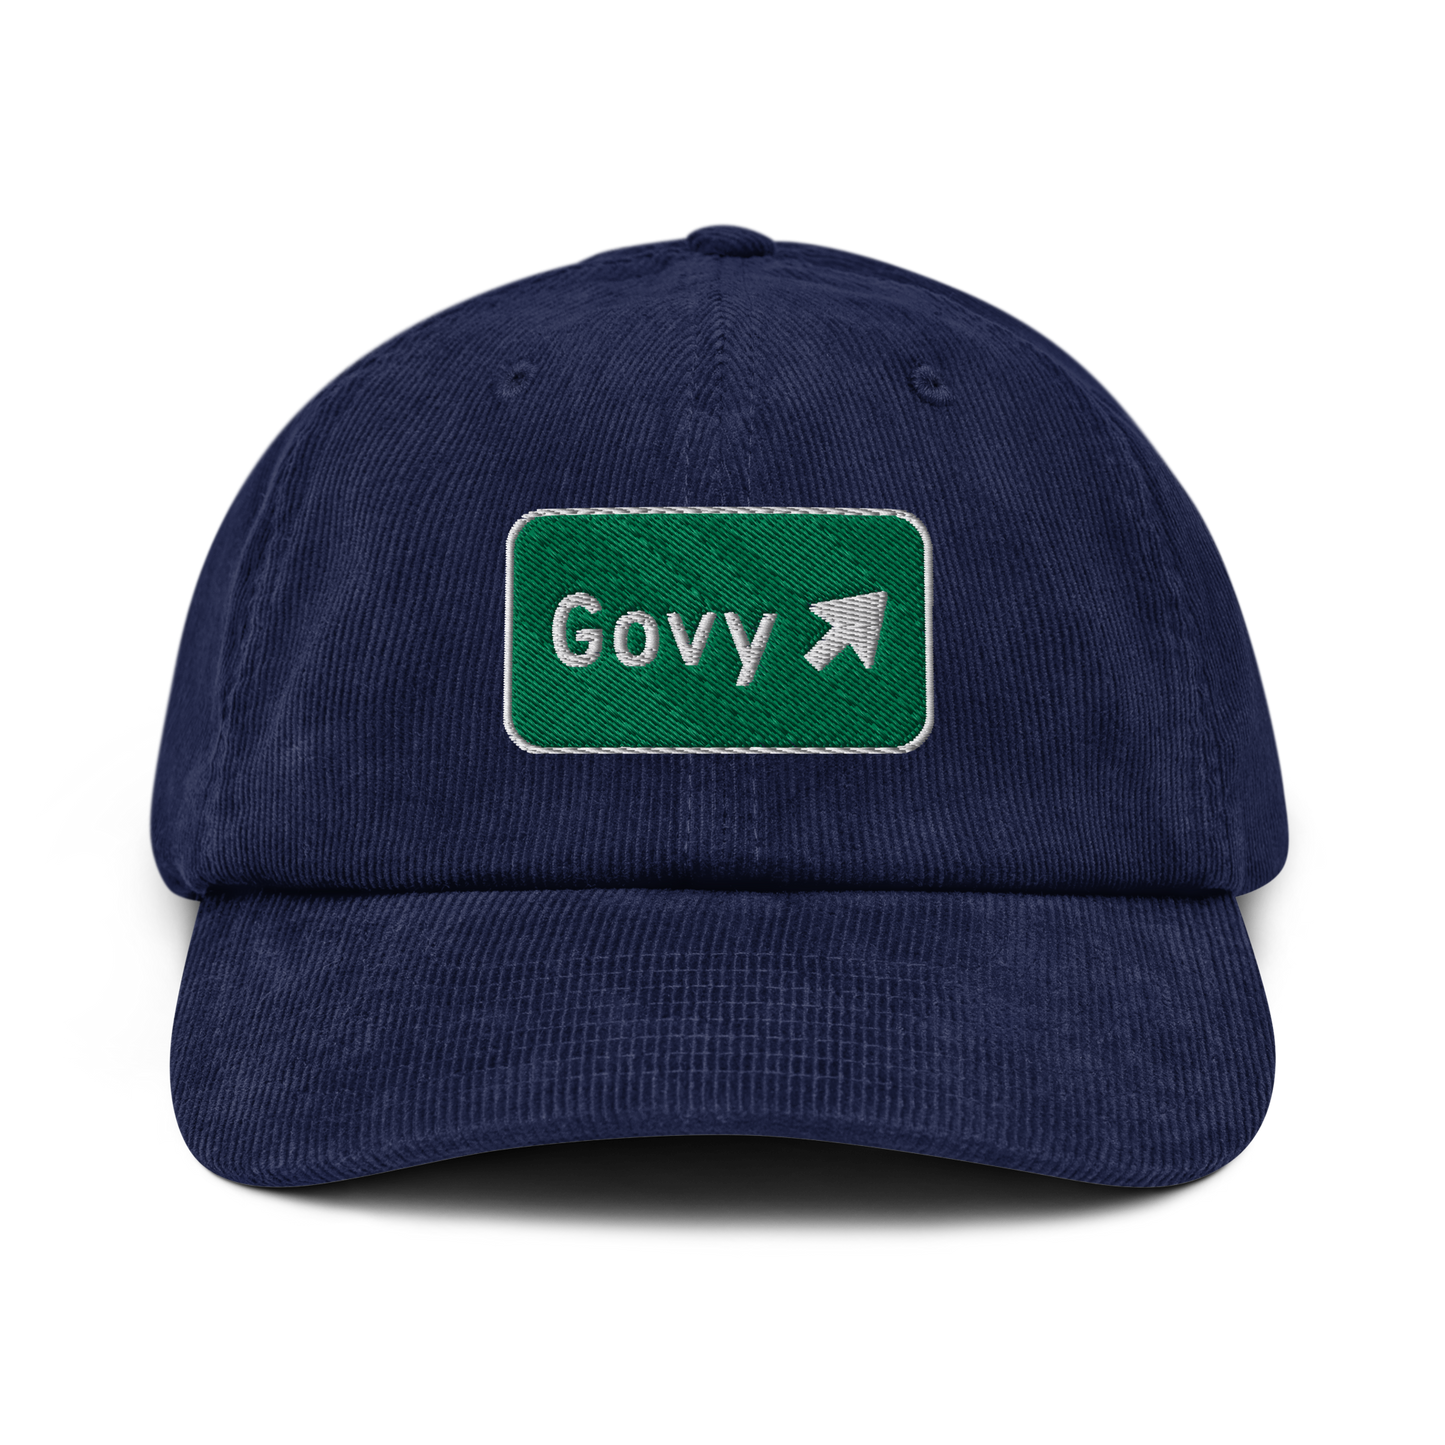 Govy road sign Corduroy hat